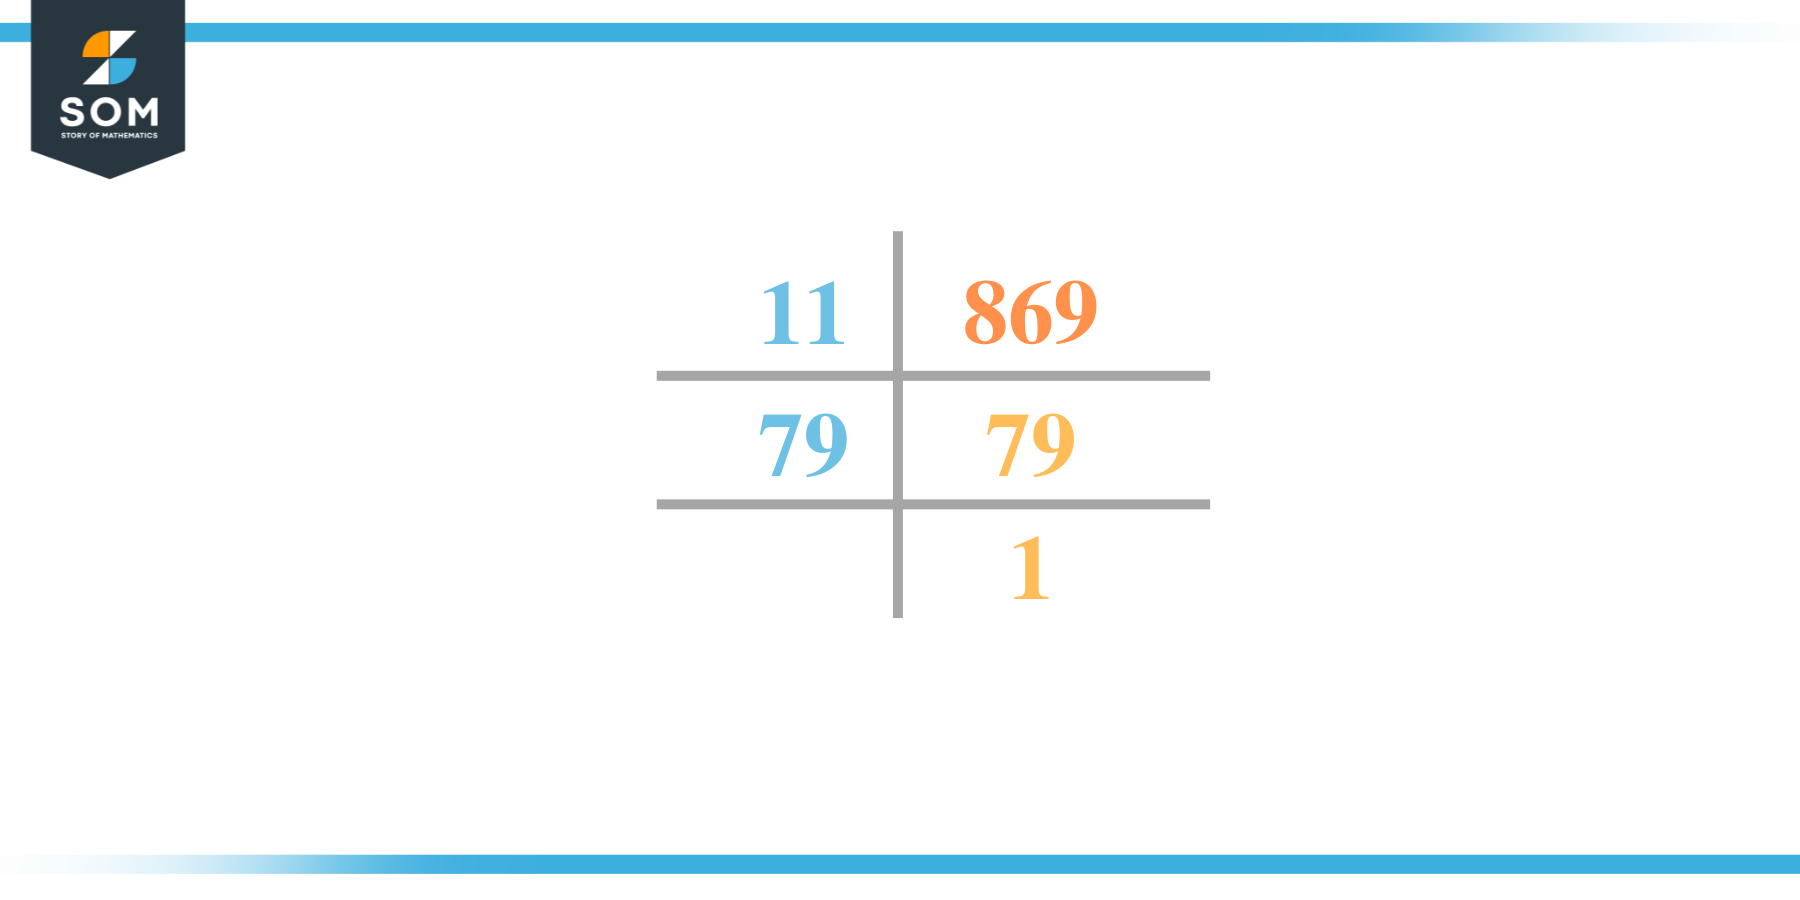 Prime factorization of 869